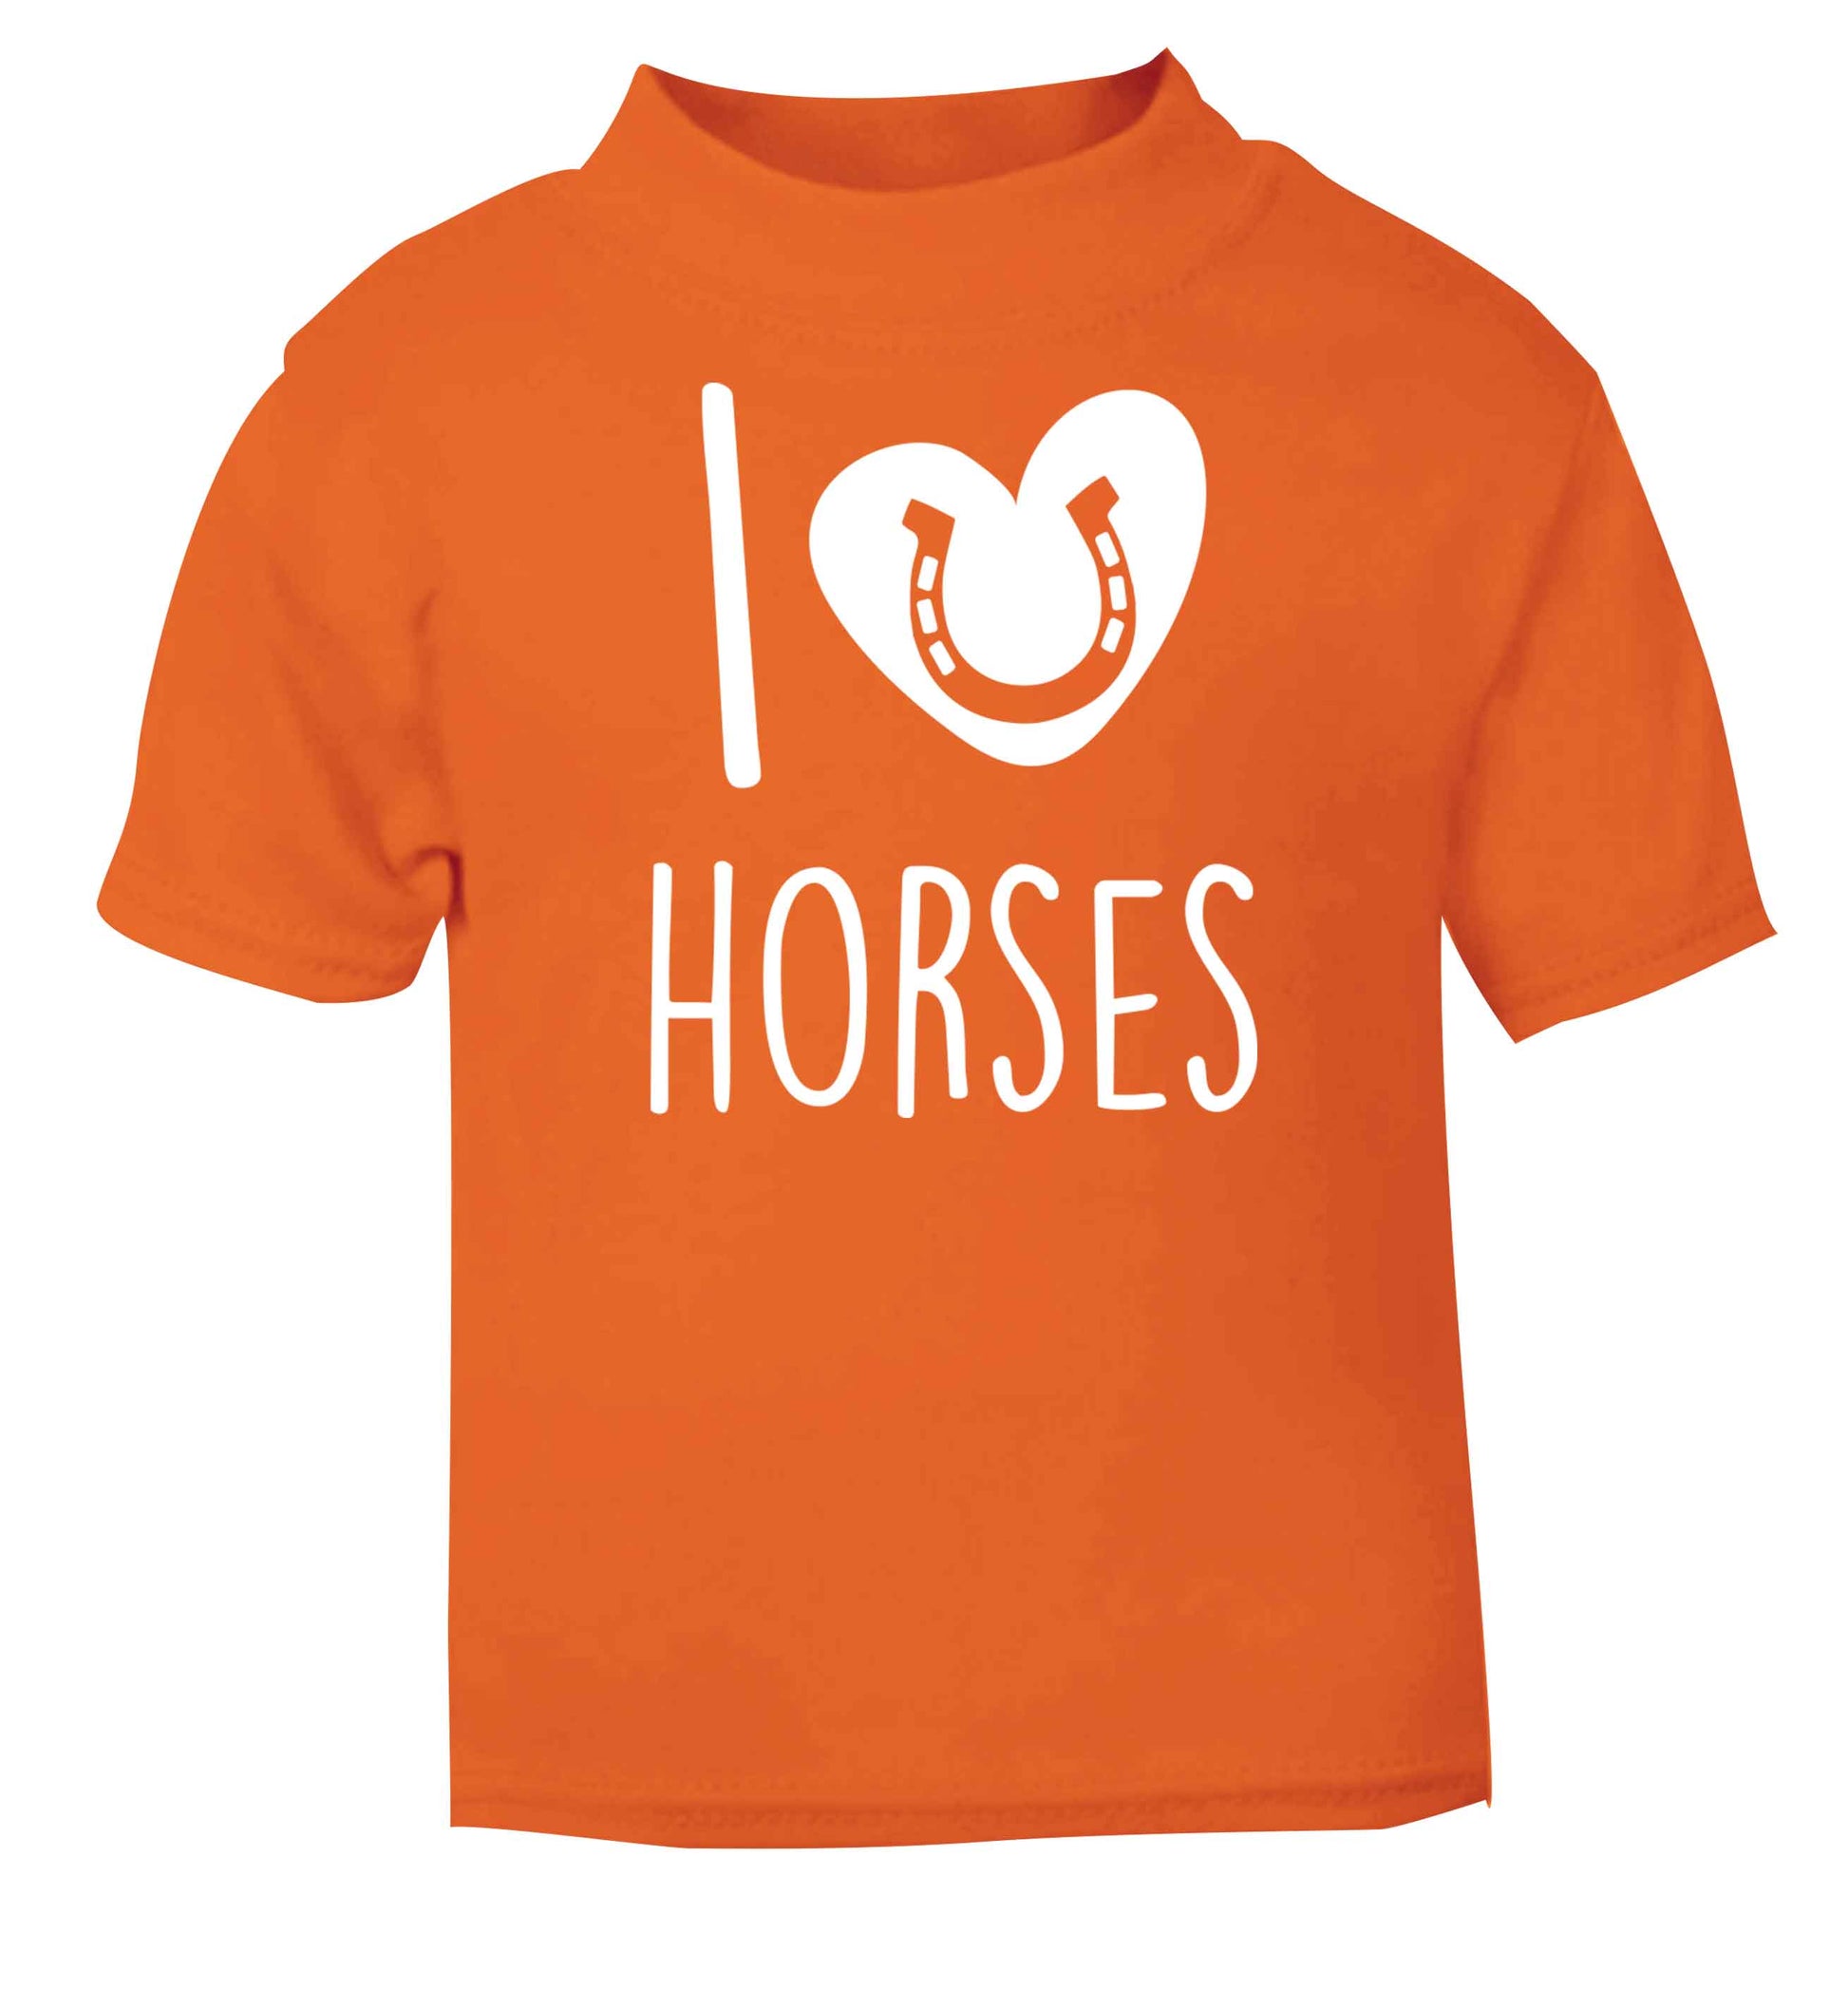 I love horses orange baby toddler Tshirt 2 Years